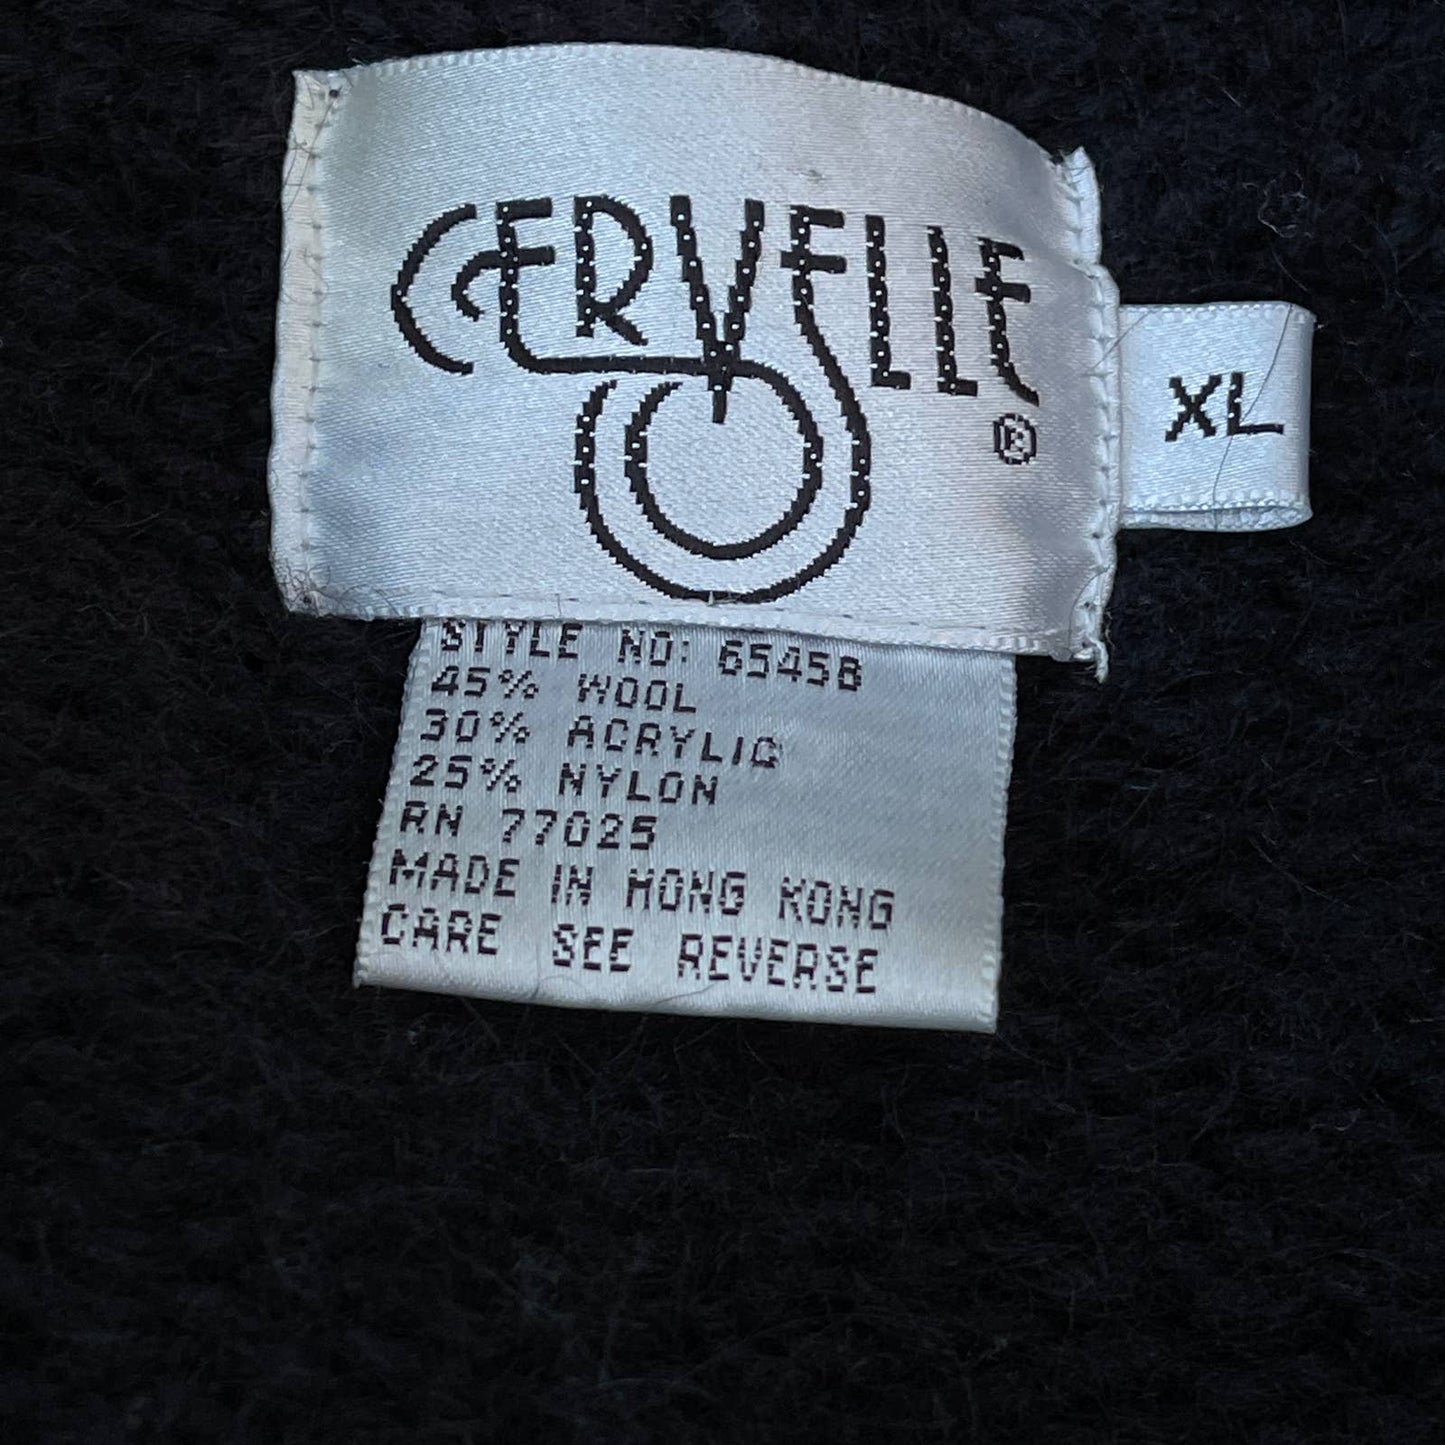 Cervelle Black Embroidered Cardigan Sweater Coat Oversized Wool 80s Vtg Size XL